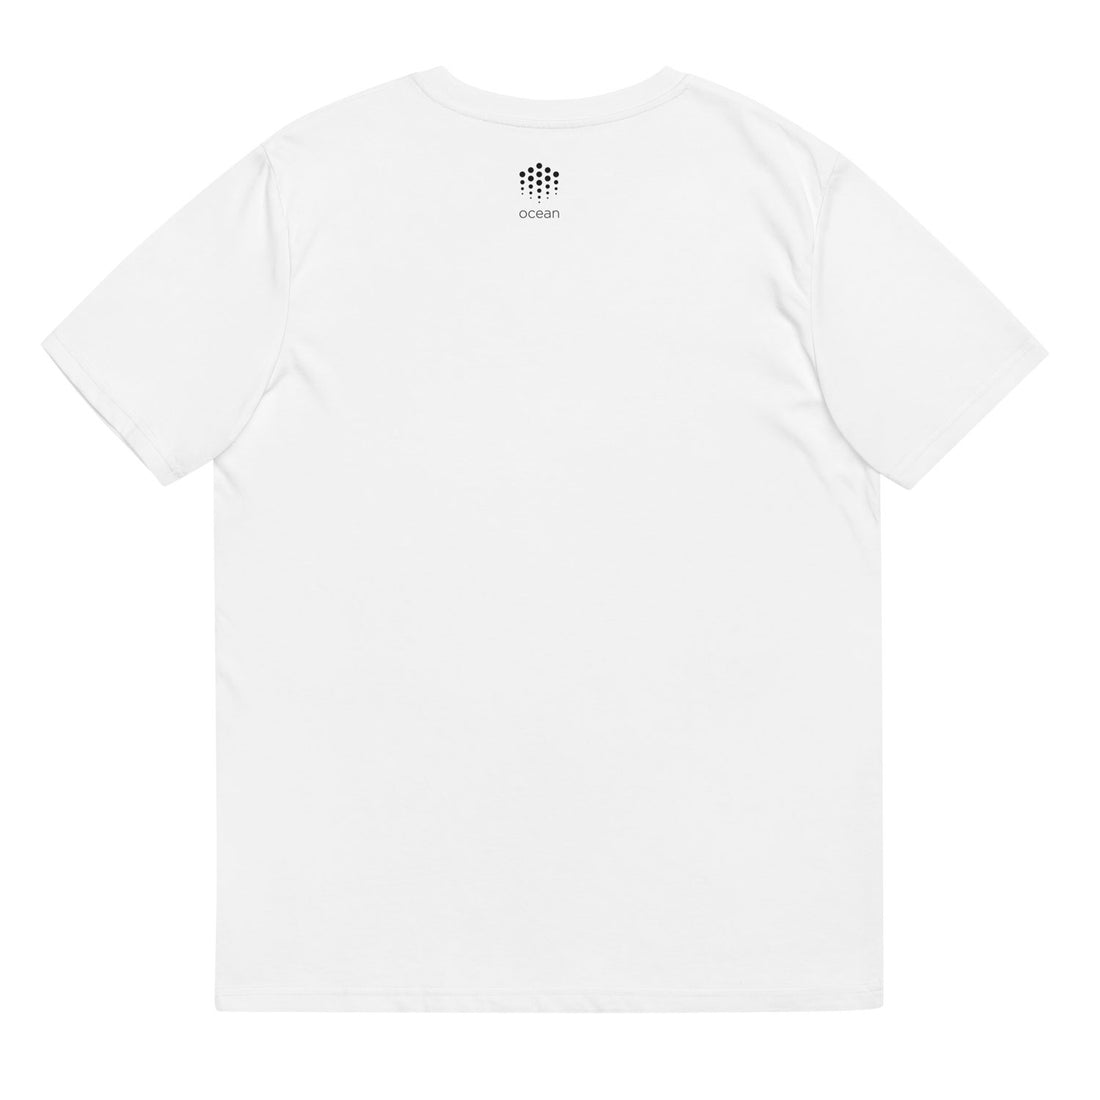 ocean token crypto t-shirt white 